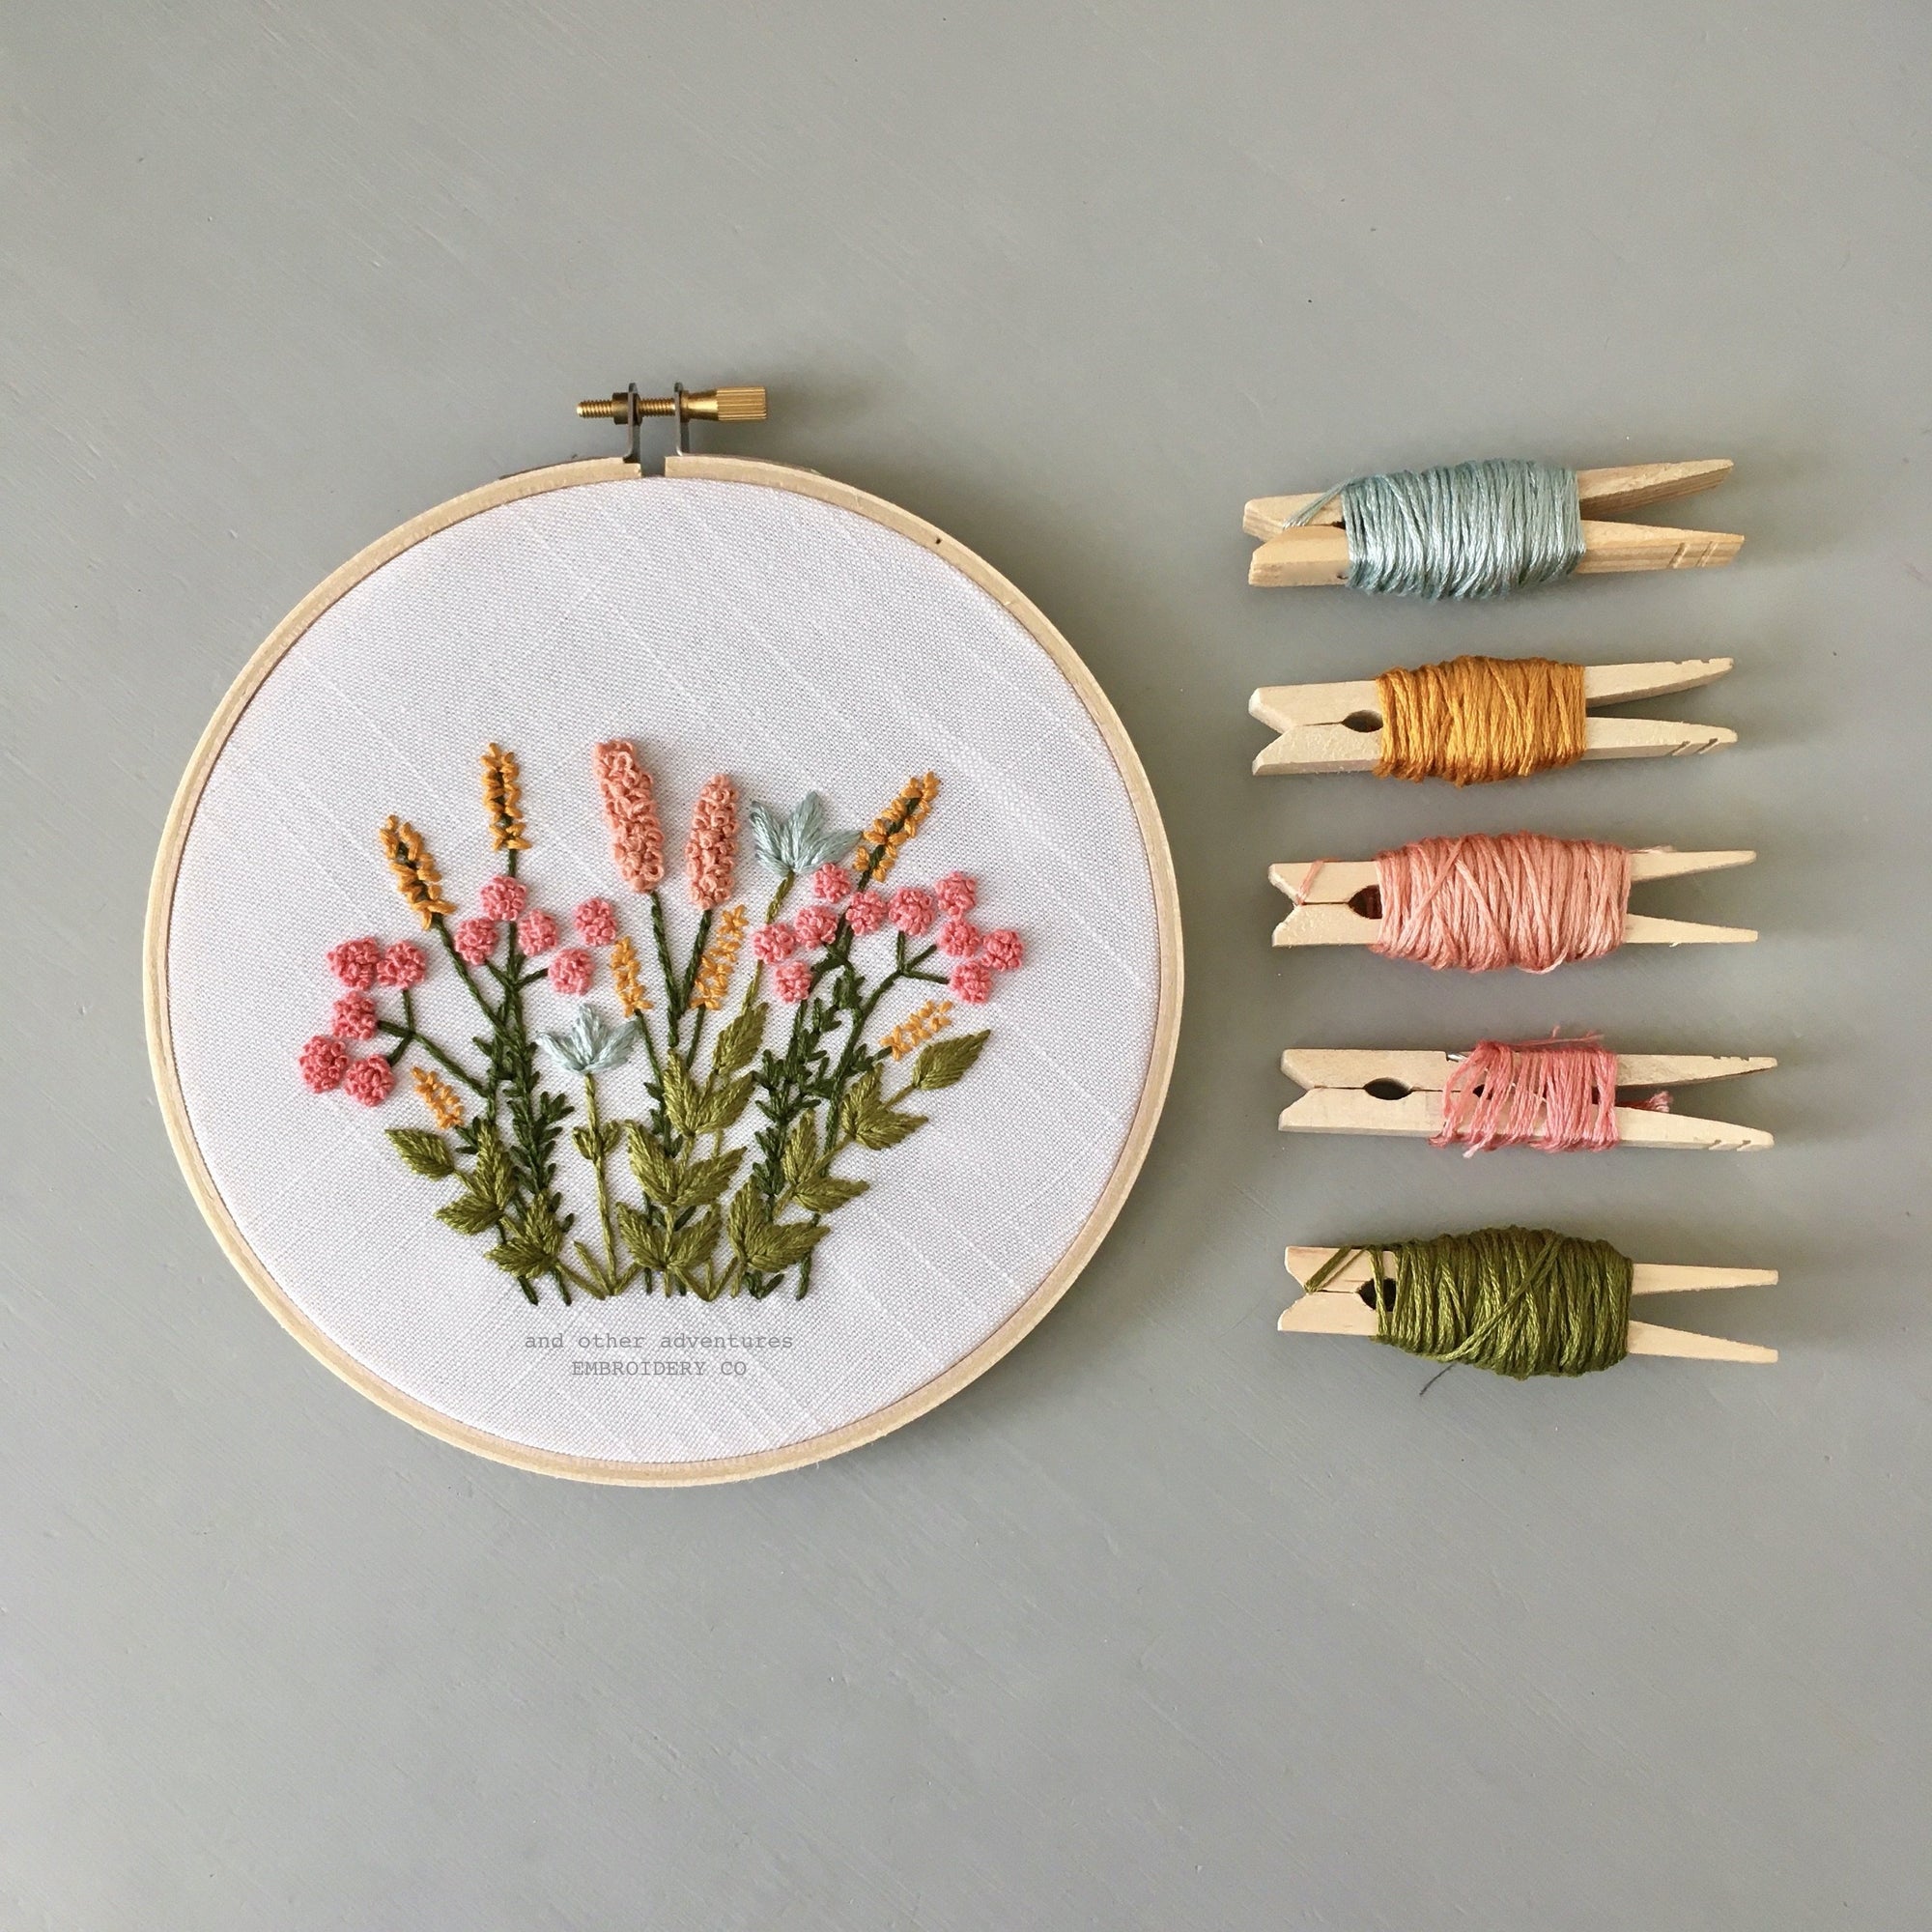 Beginner Hand Embroidery Pattern - Ocean Daydream